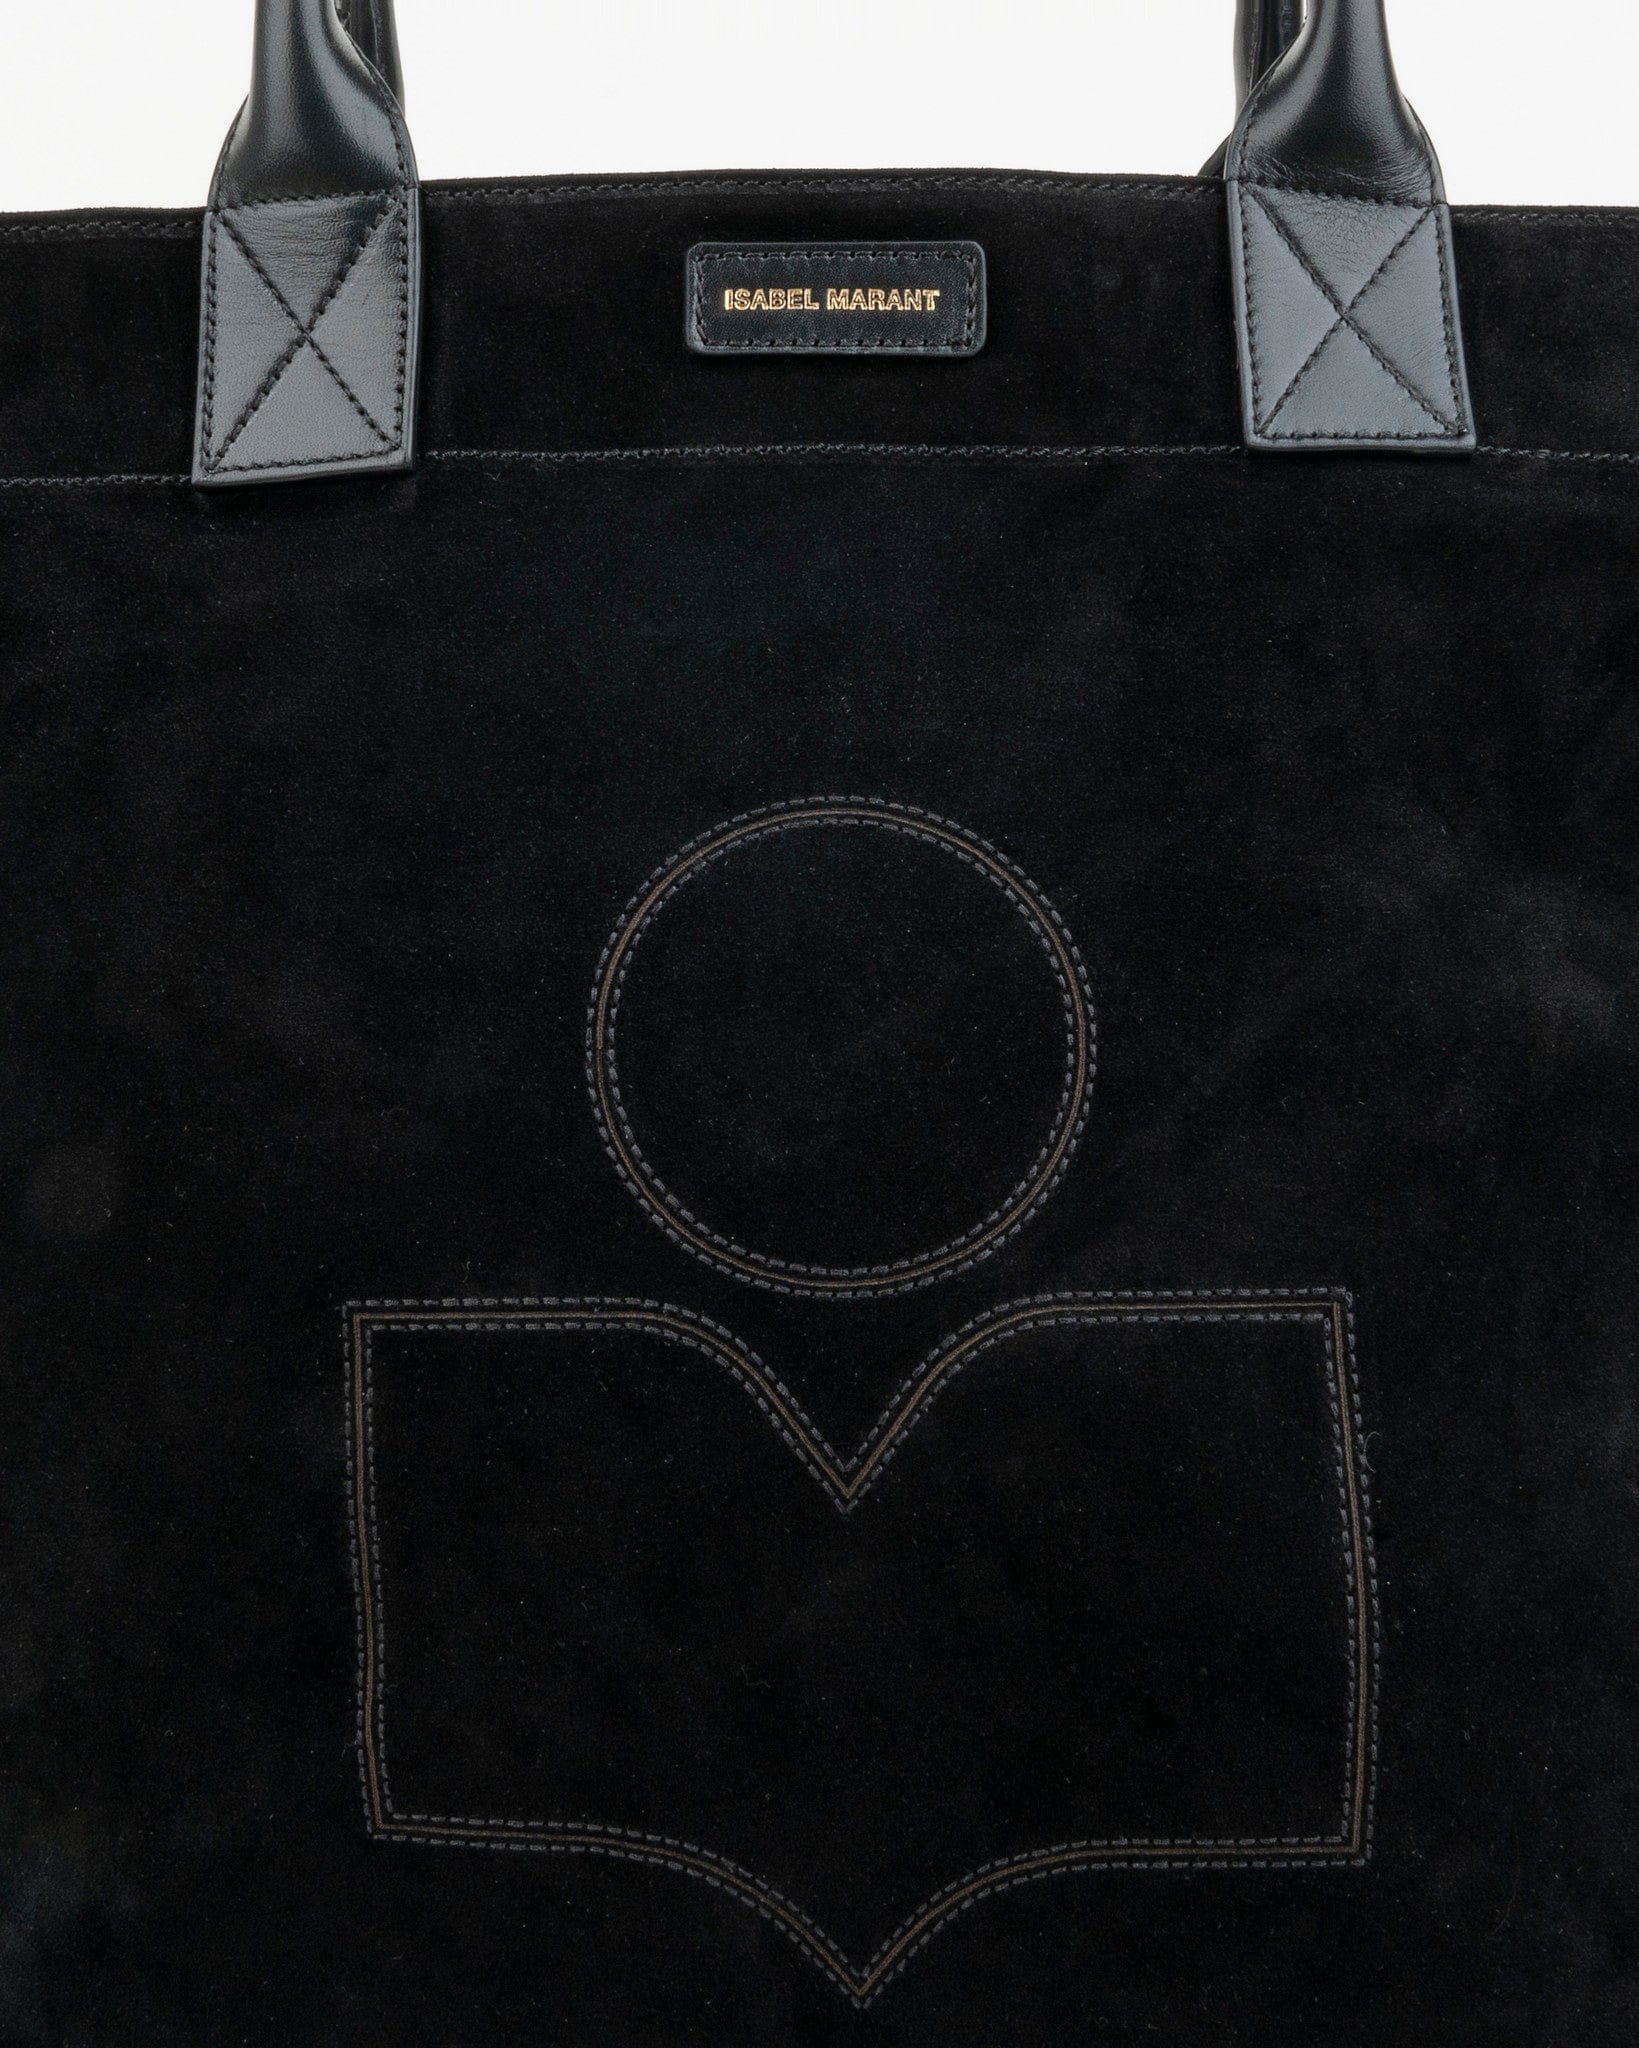 Isabel Marant Etoile Women Bags Yenky Suede Logo Tote in Black